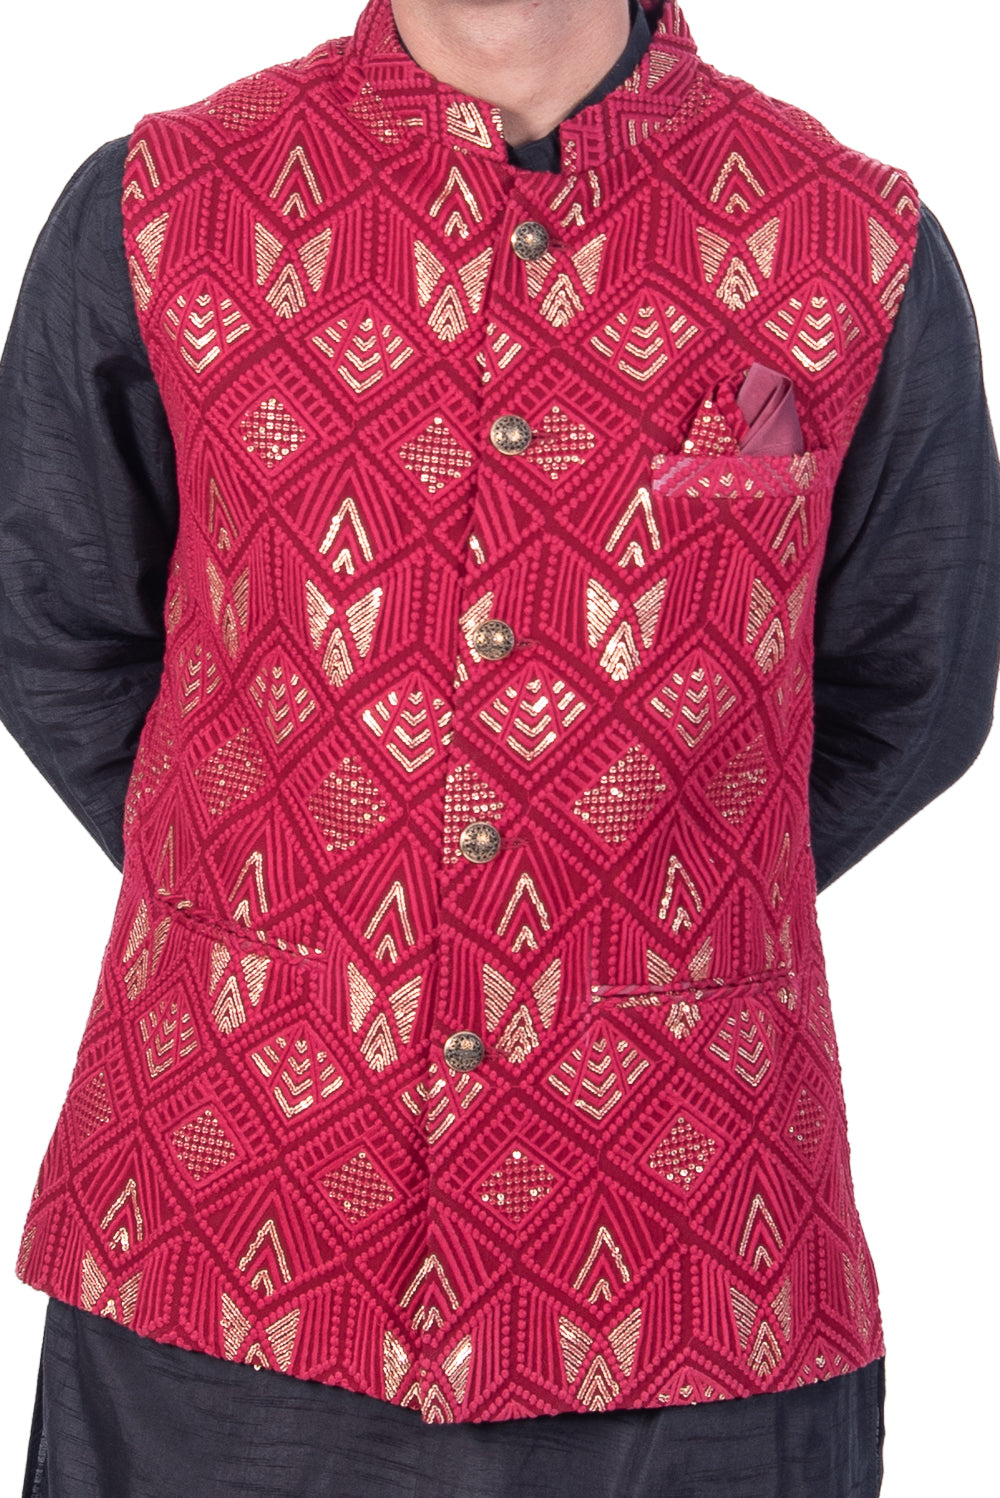 Red Aztec design Jacket with sequince